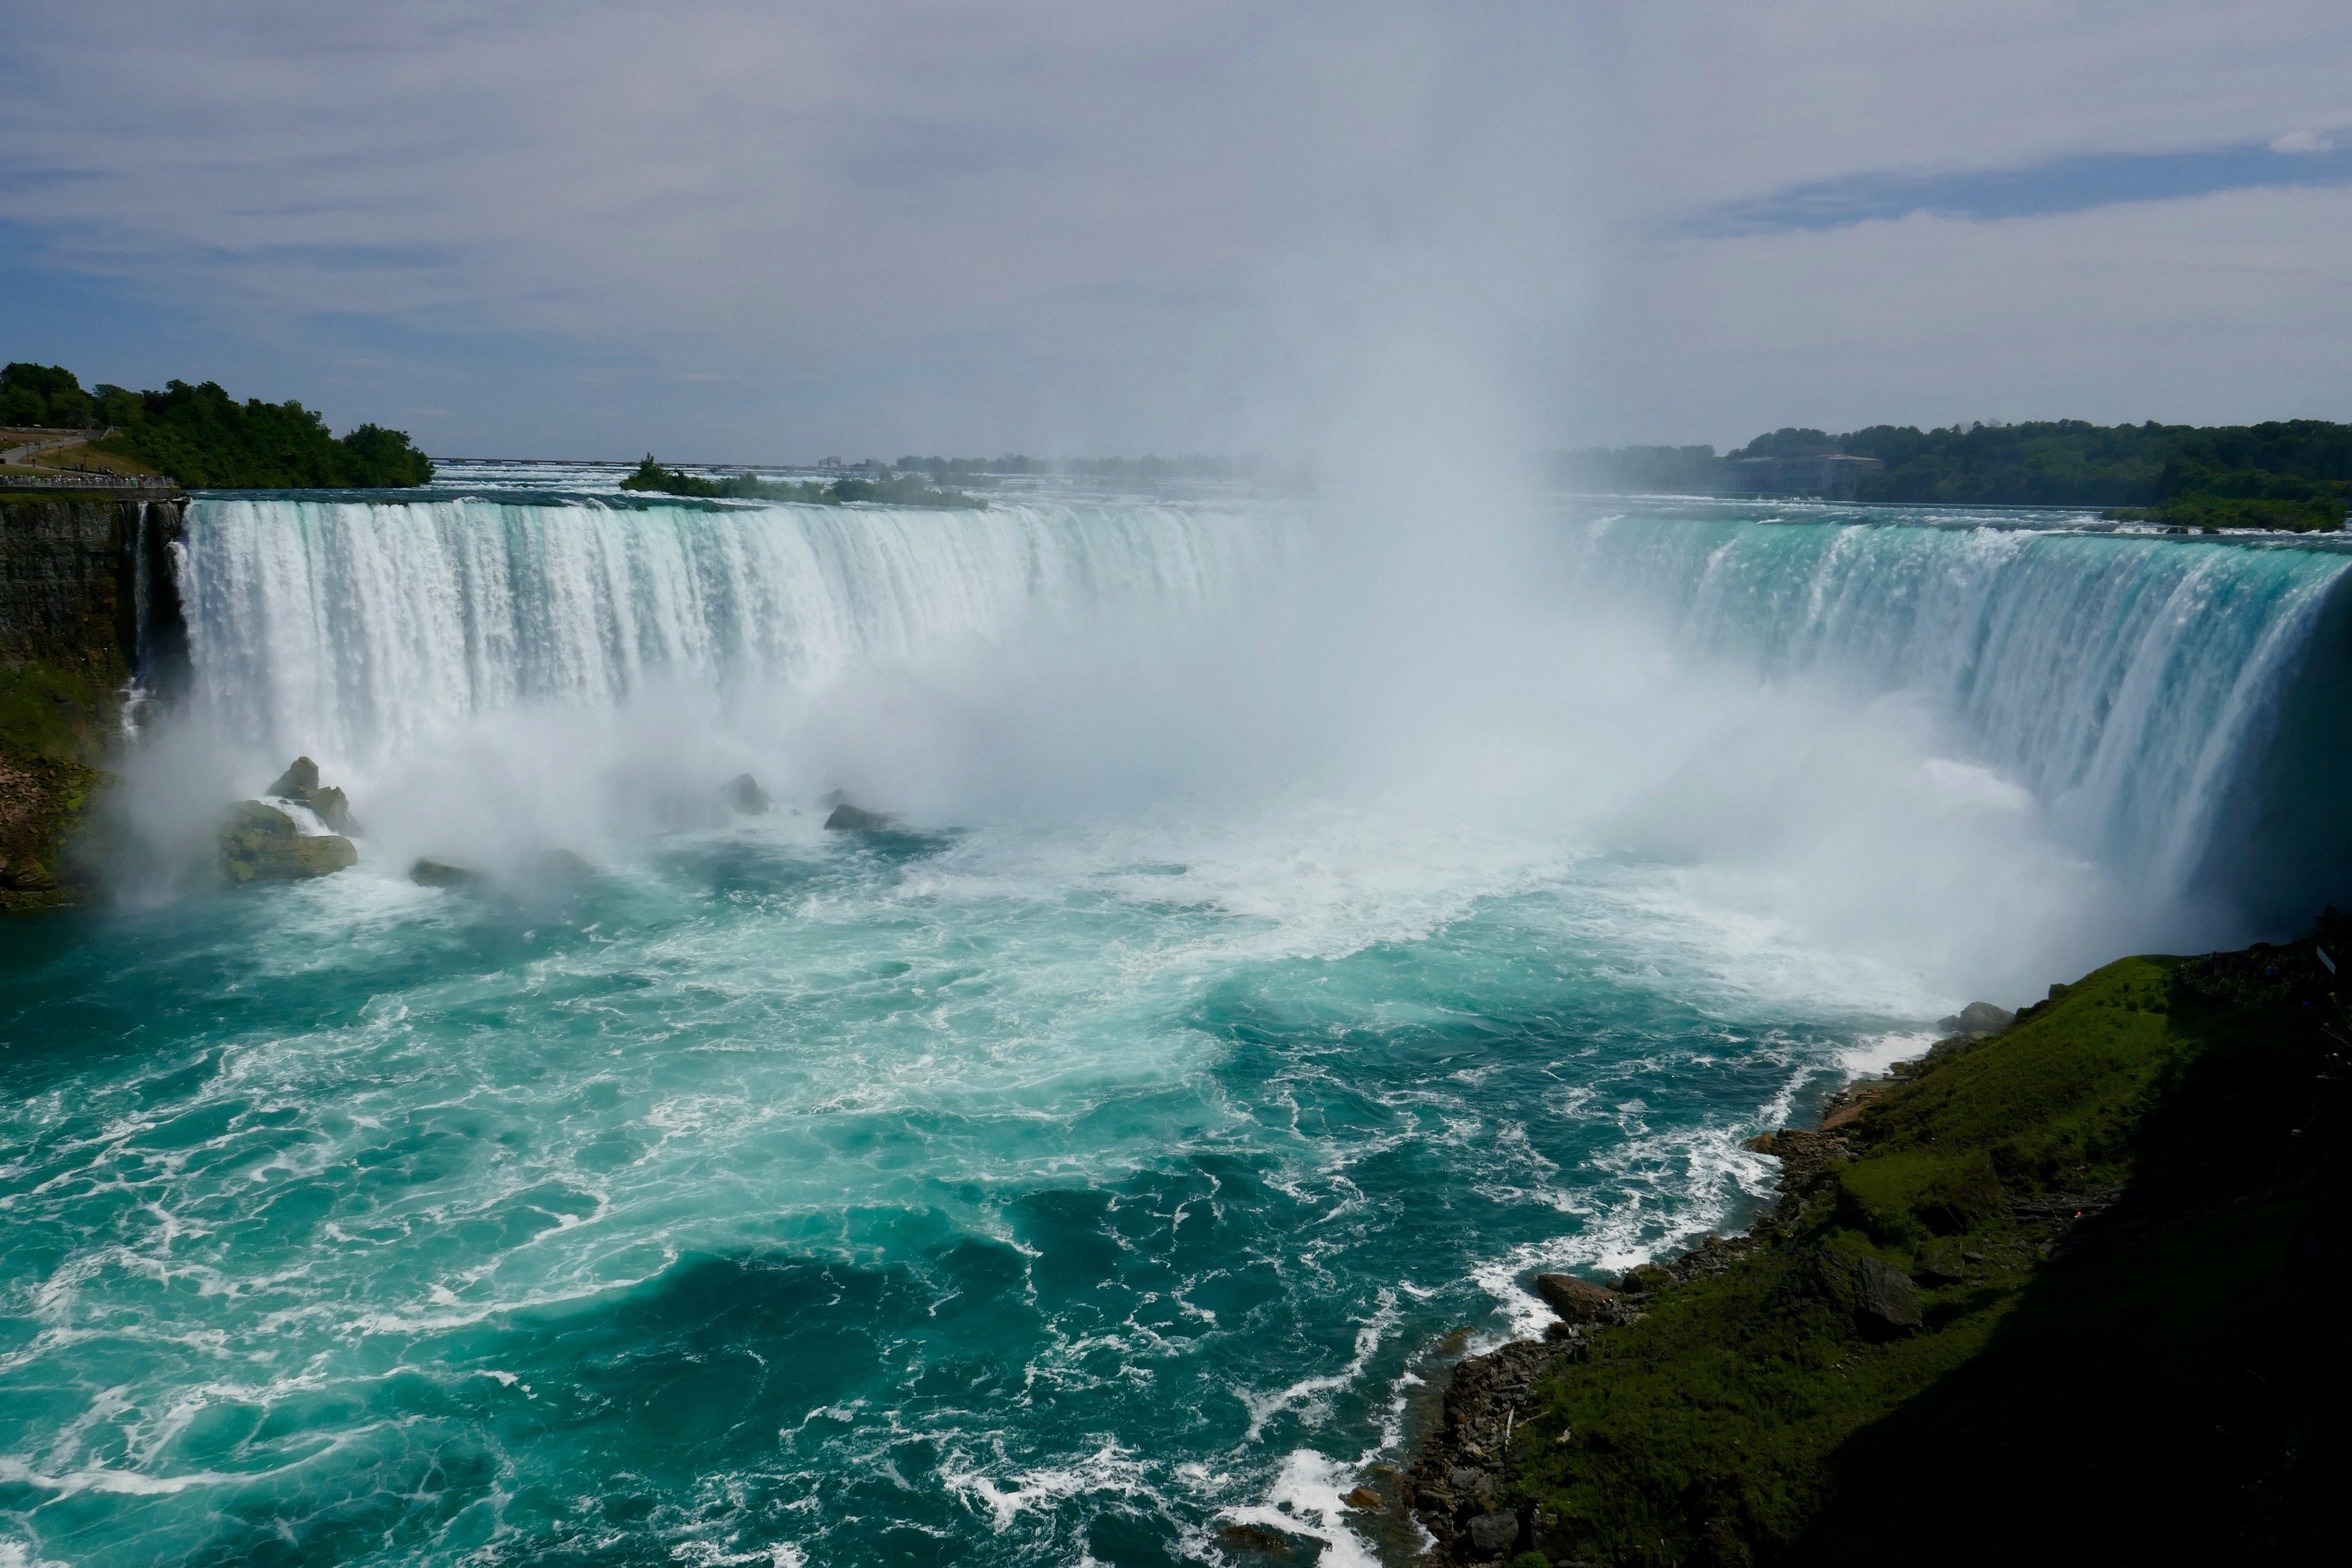 Niagara_Falls_Canada_edward-koorey-Gcc3c6MfSM0-unsplash.jpg